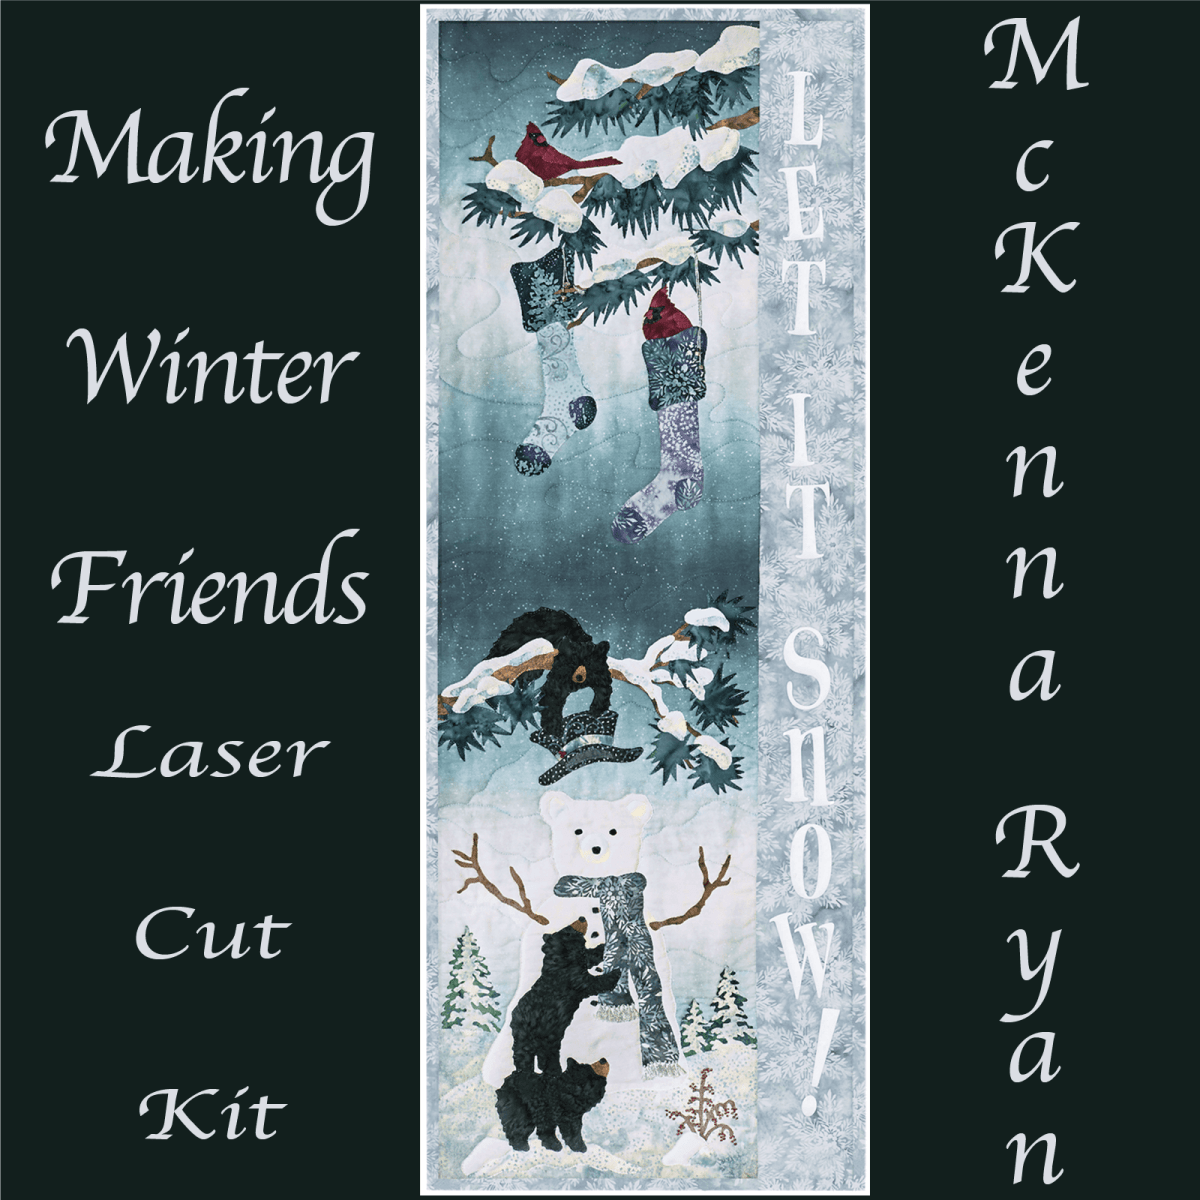 Making Winter Friends - Let It Snow Laser Cut Fabric Kit by McKenna Ryan using Hoffman Fabrics -LKMWF-LIS - Justin Fabric!